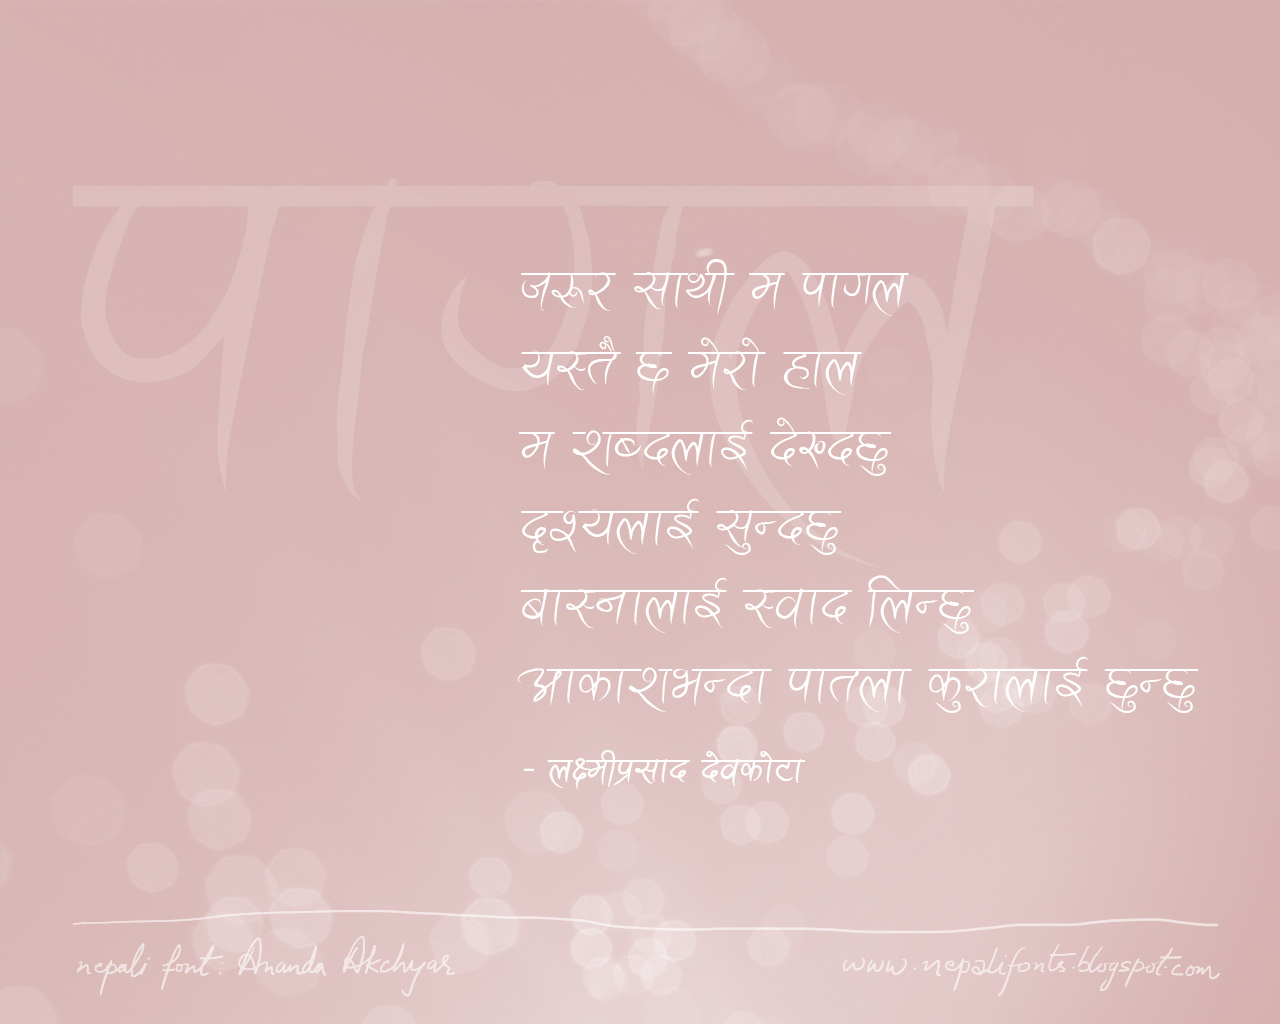 New Nepali Fonts: Nepali Poems wallpaper with handwriting font